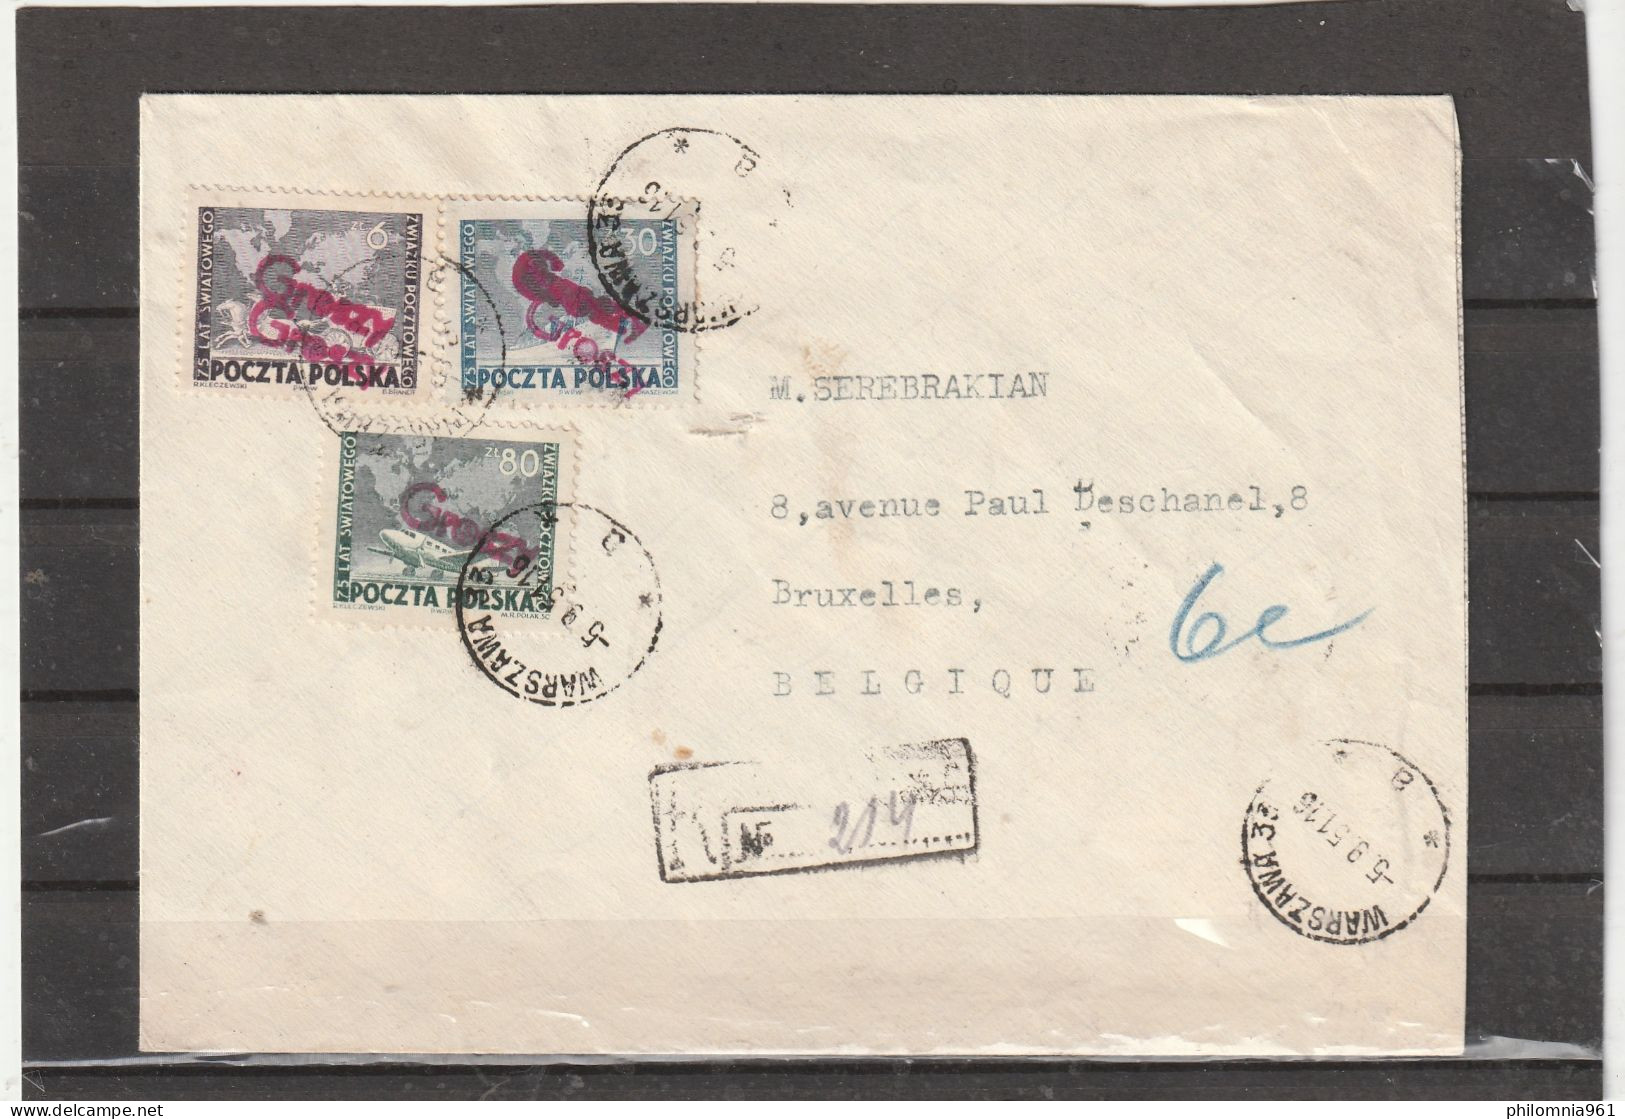 Poland COVER To Belgium 1951 - Lettres & Documents